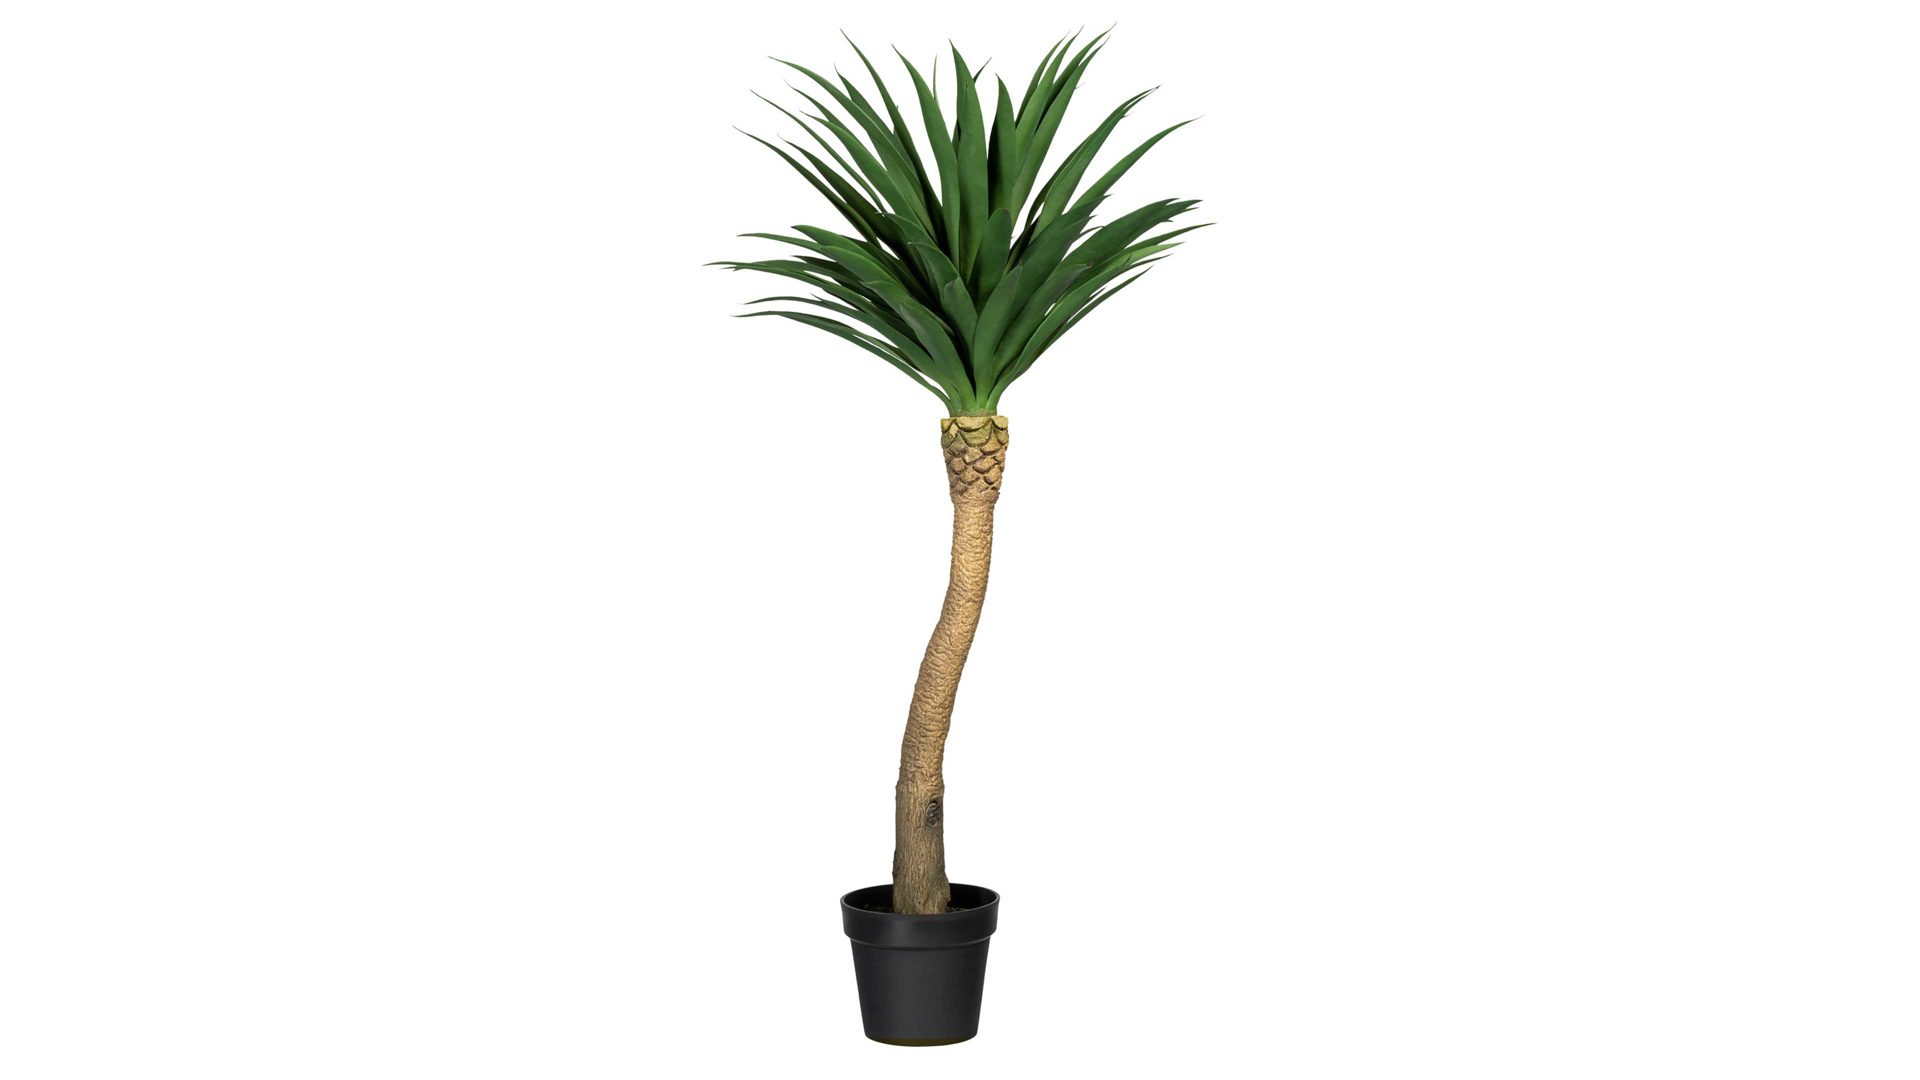 Pflanze Gasper aus Kunststoff in Grün Yuccapalme grüner Kunststoff & schwarzer Topf – Höhe ca. 120 cm